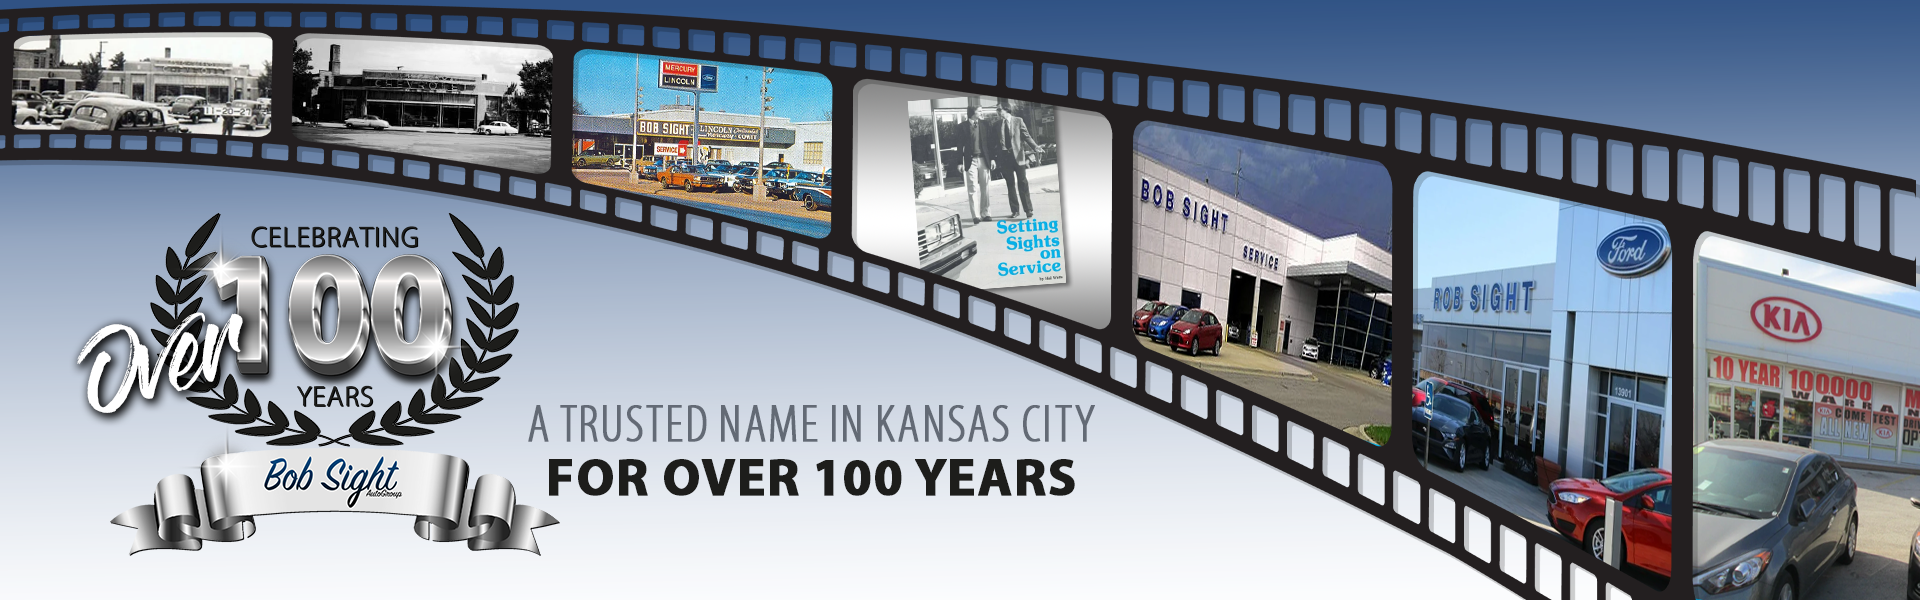 Sight Family History at Kansas City Ford Dealer